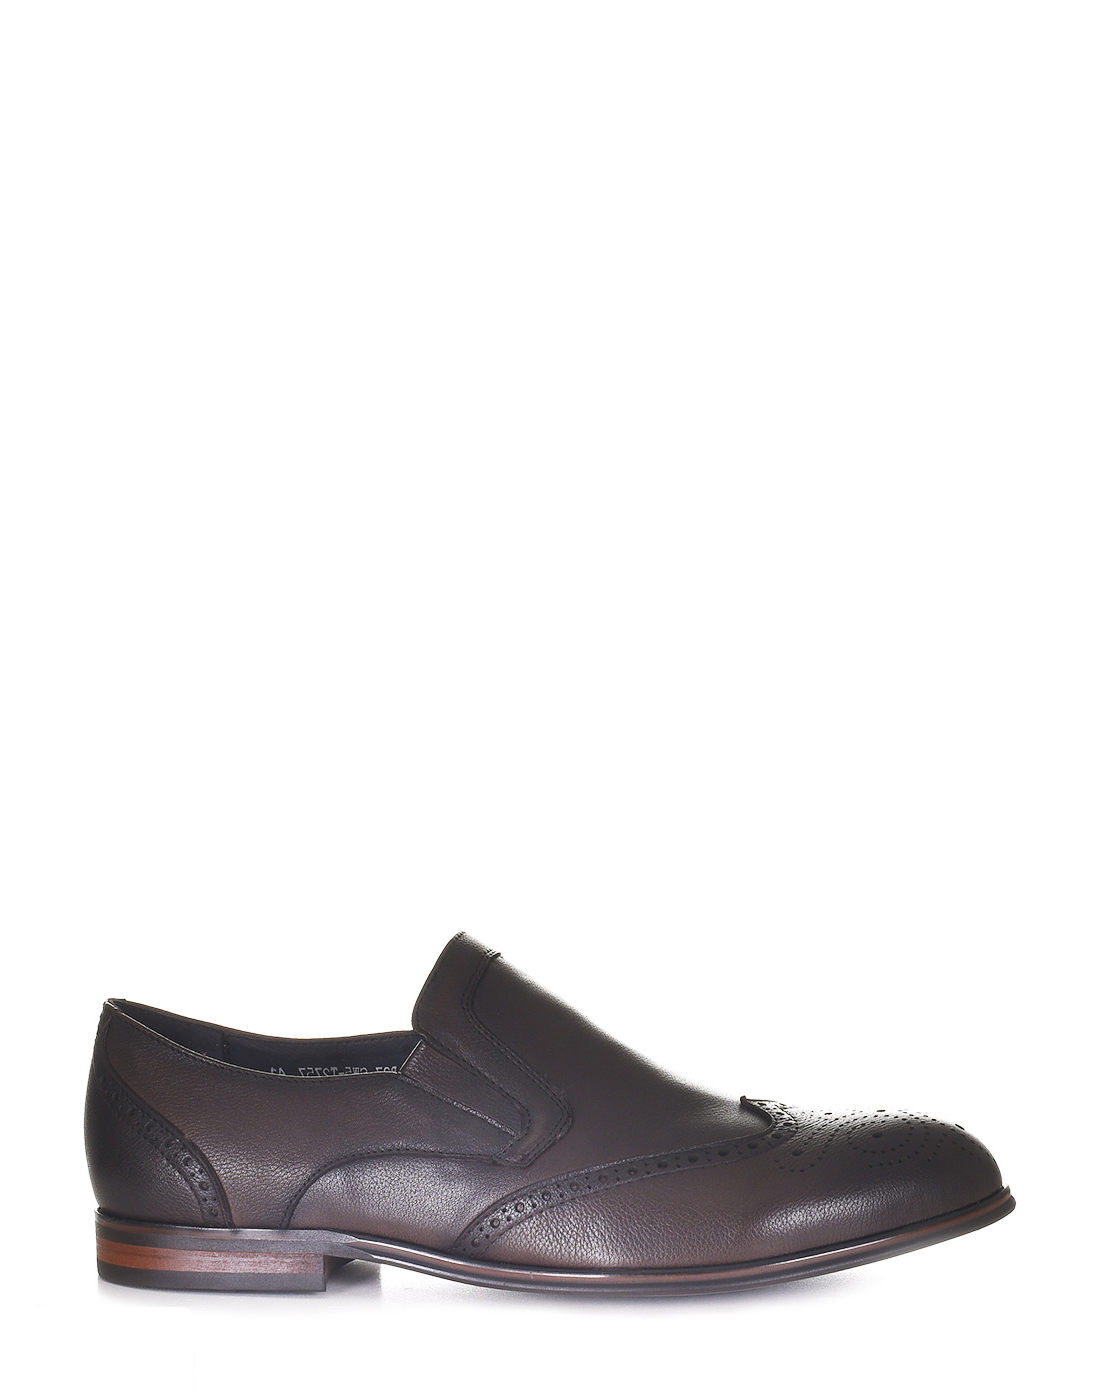 Туфли мужские ROSCOTE B288-B27 коричневые 43 RU